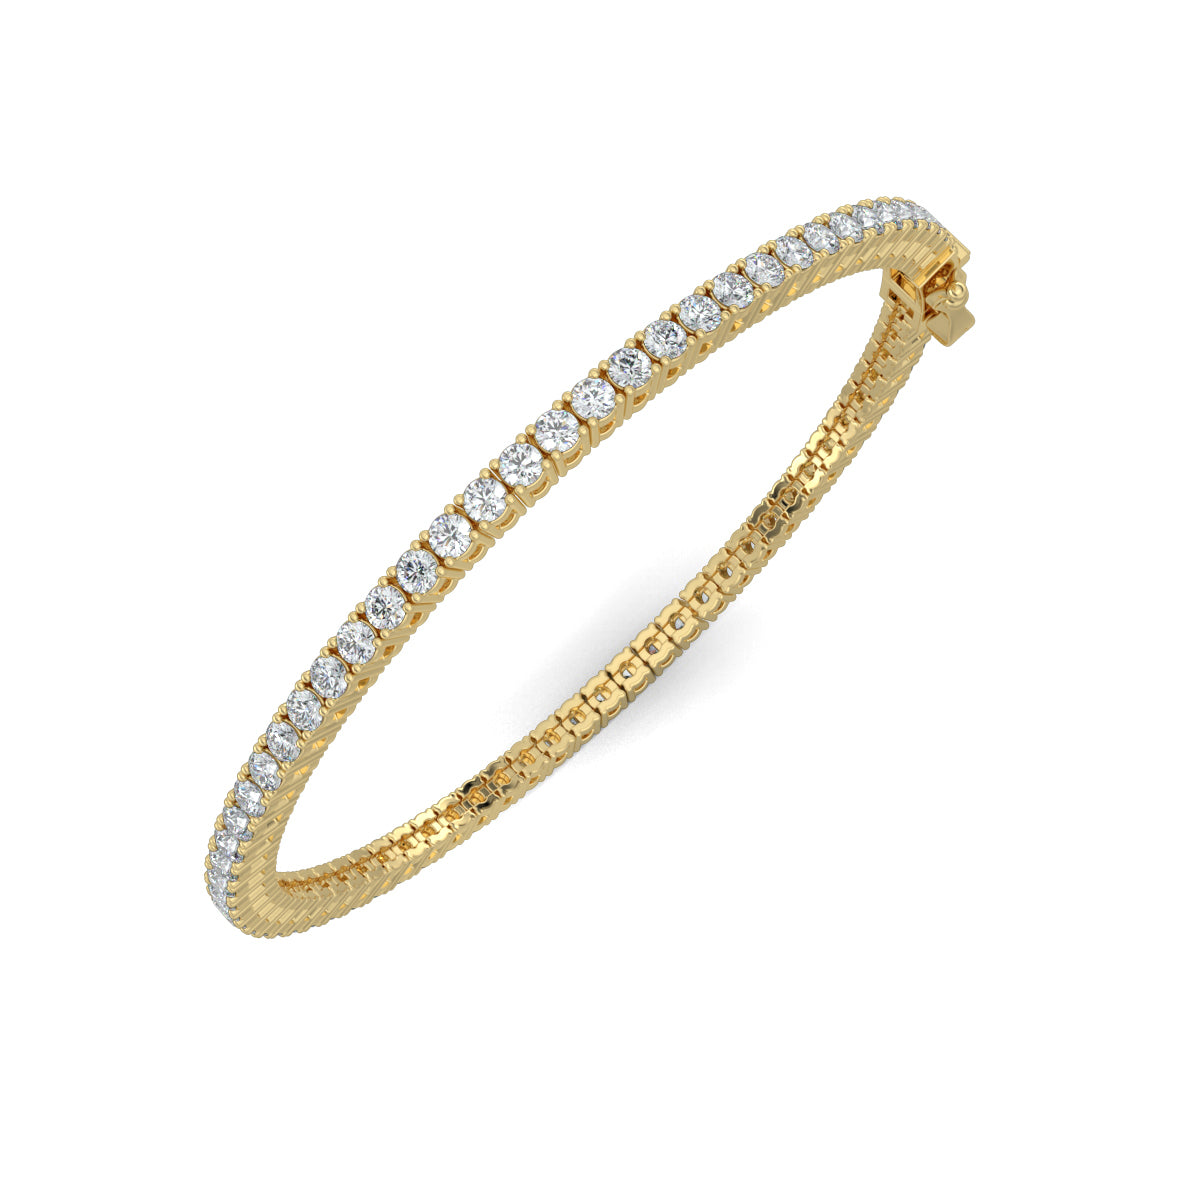 Yellow Gold, Diamond Bracelet, Natural diamond bracelet, Lab-grown diamond bracelet, 15-Pointer Tennis Bracelet, tennis bracelet, prong setting, jewelry